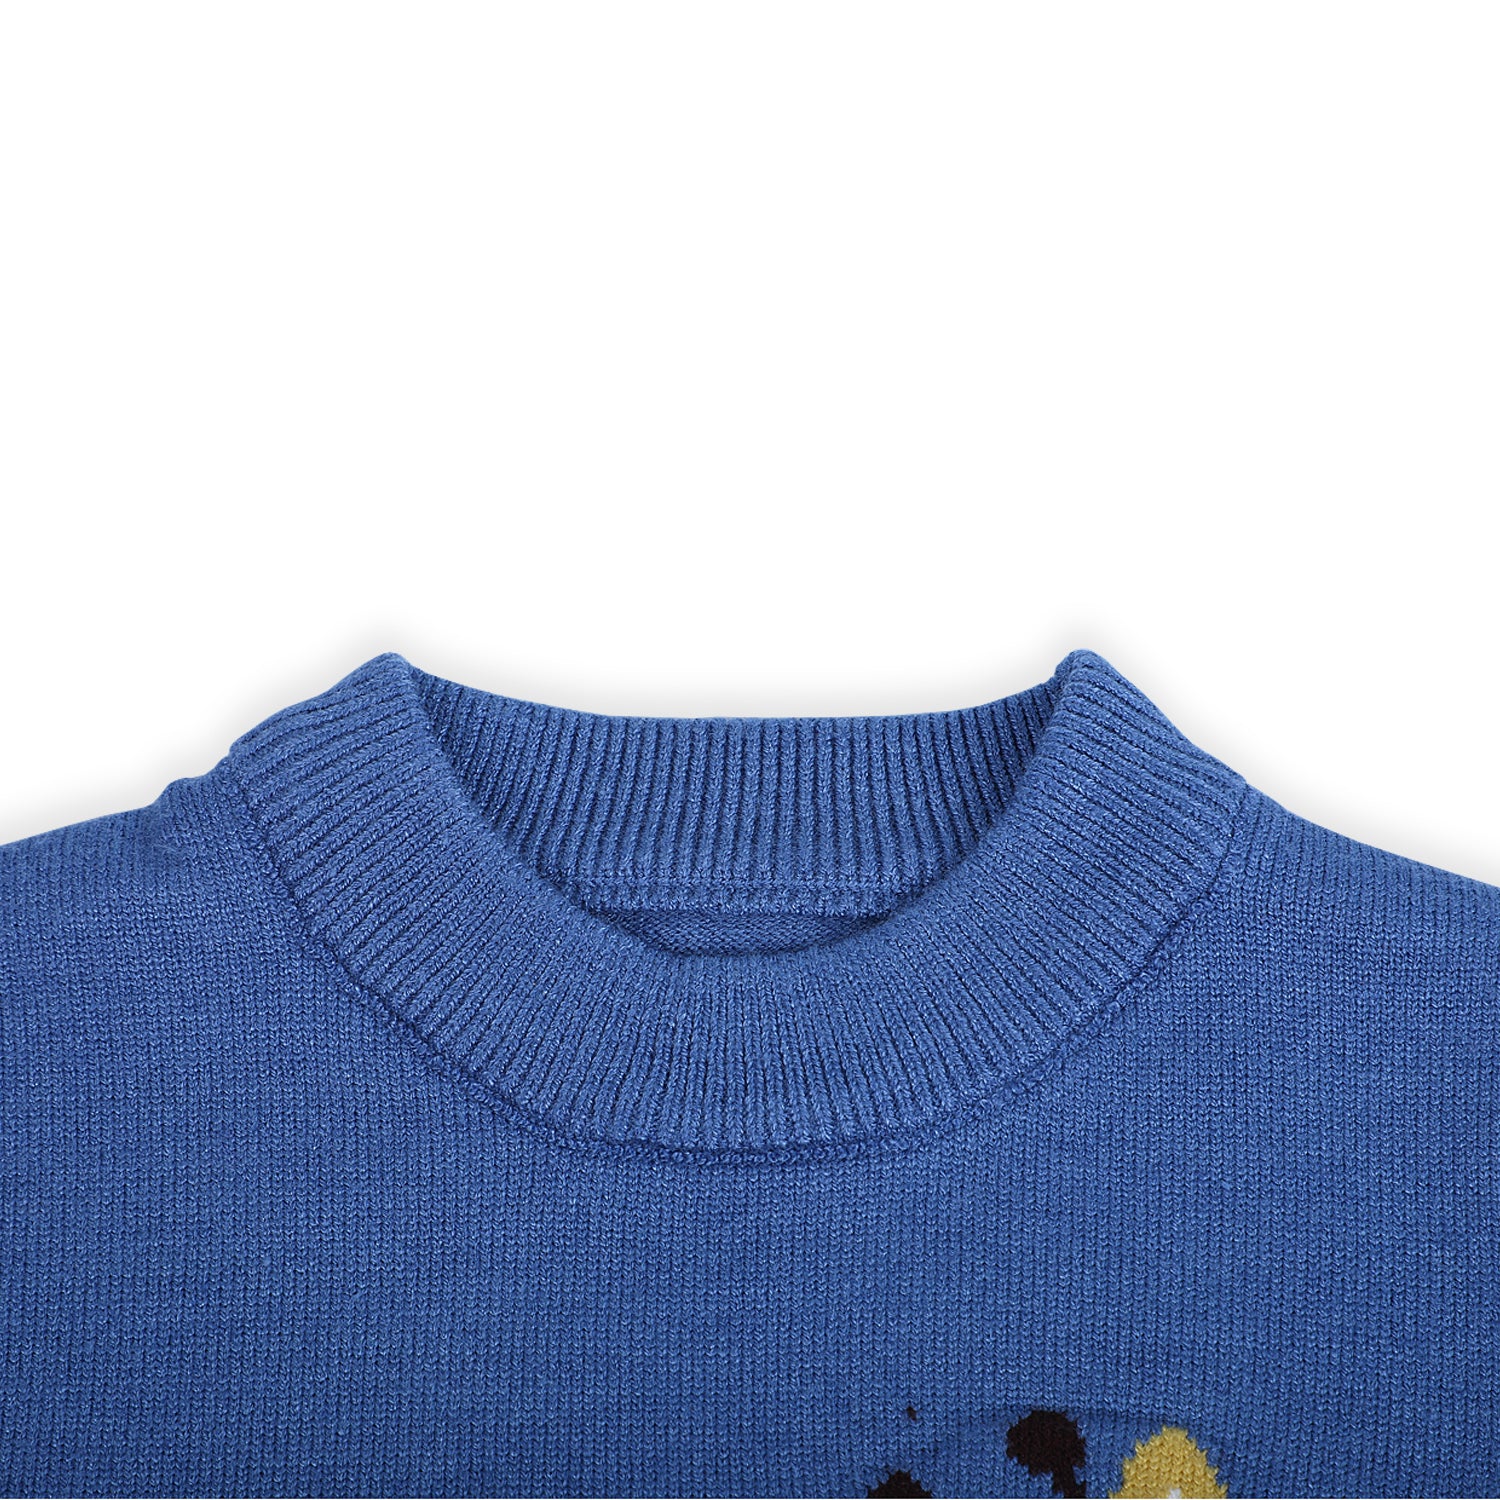 Cute Giraffe Premium Full Sleeves Knitted Sweater - Blue And White